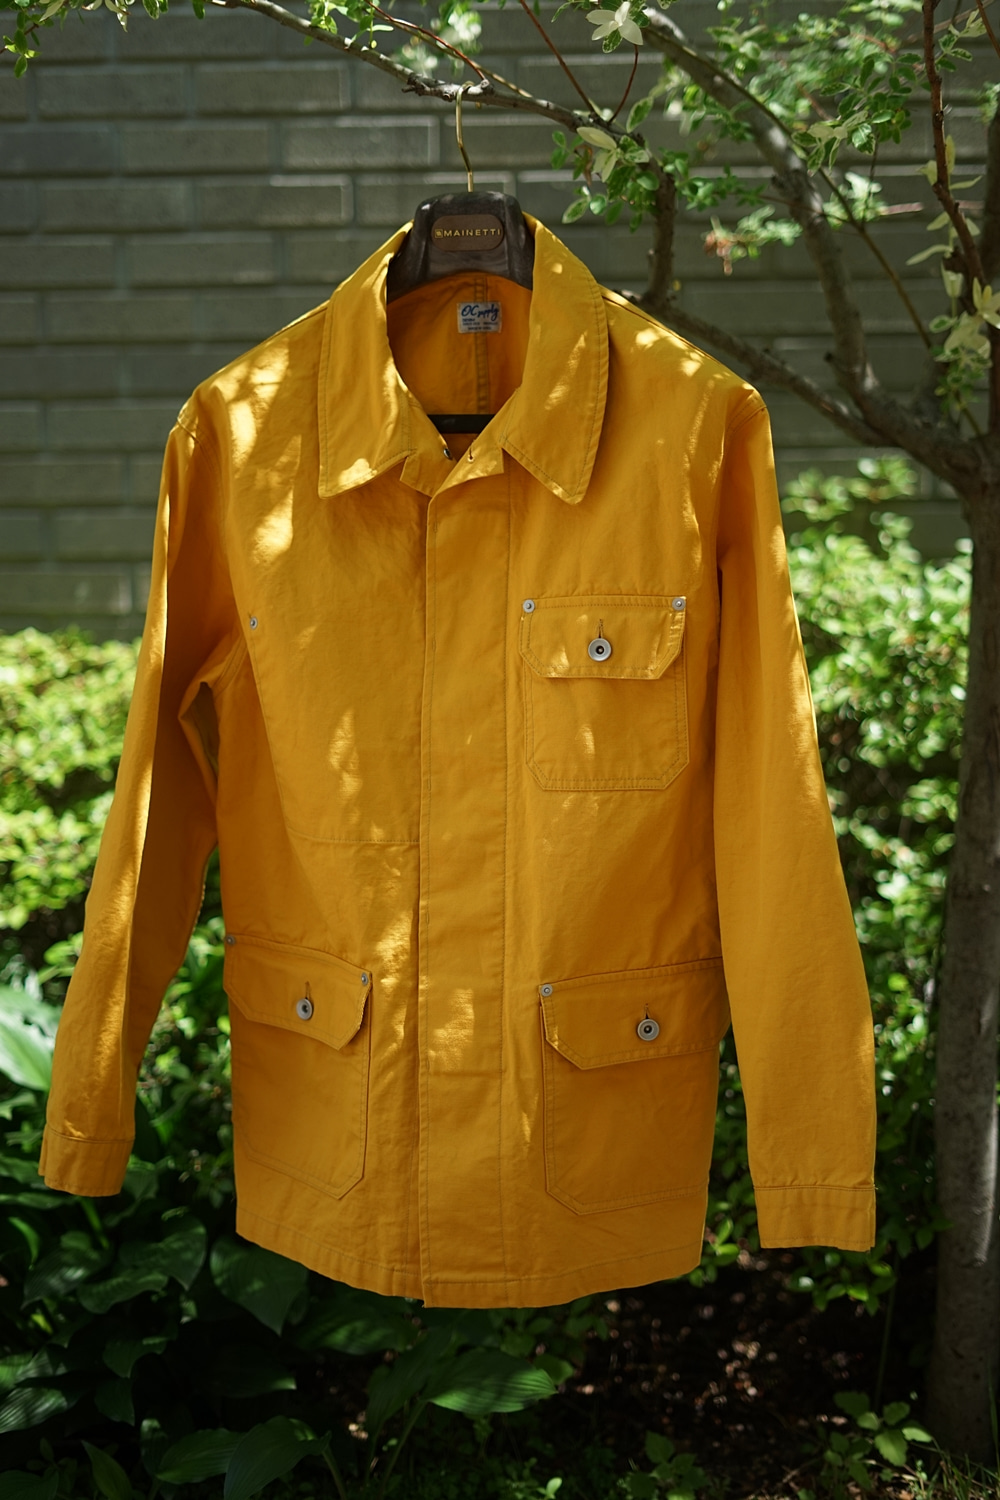 yellow French work jacket Type.2OC supply(오씨서플라이)